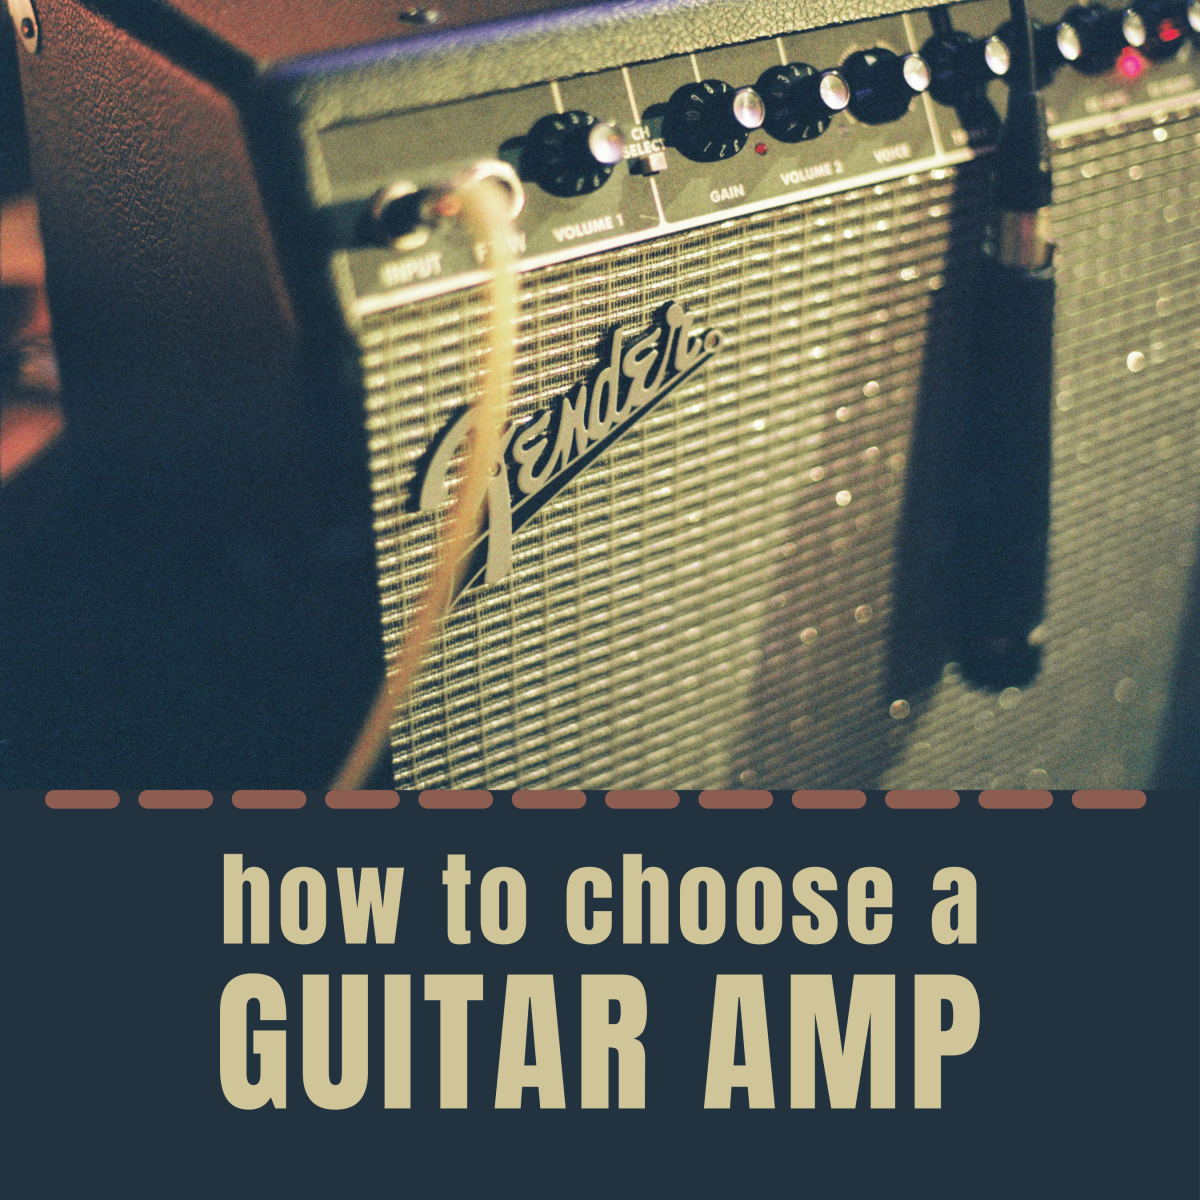 Advice on choosing a guitar amp for a beginner.